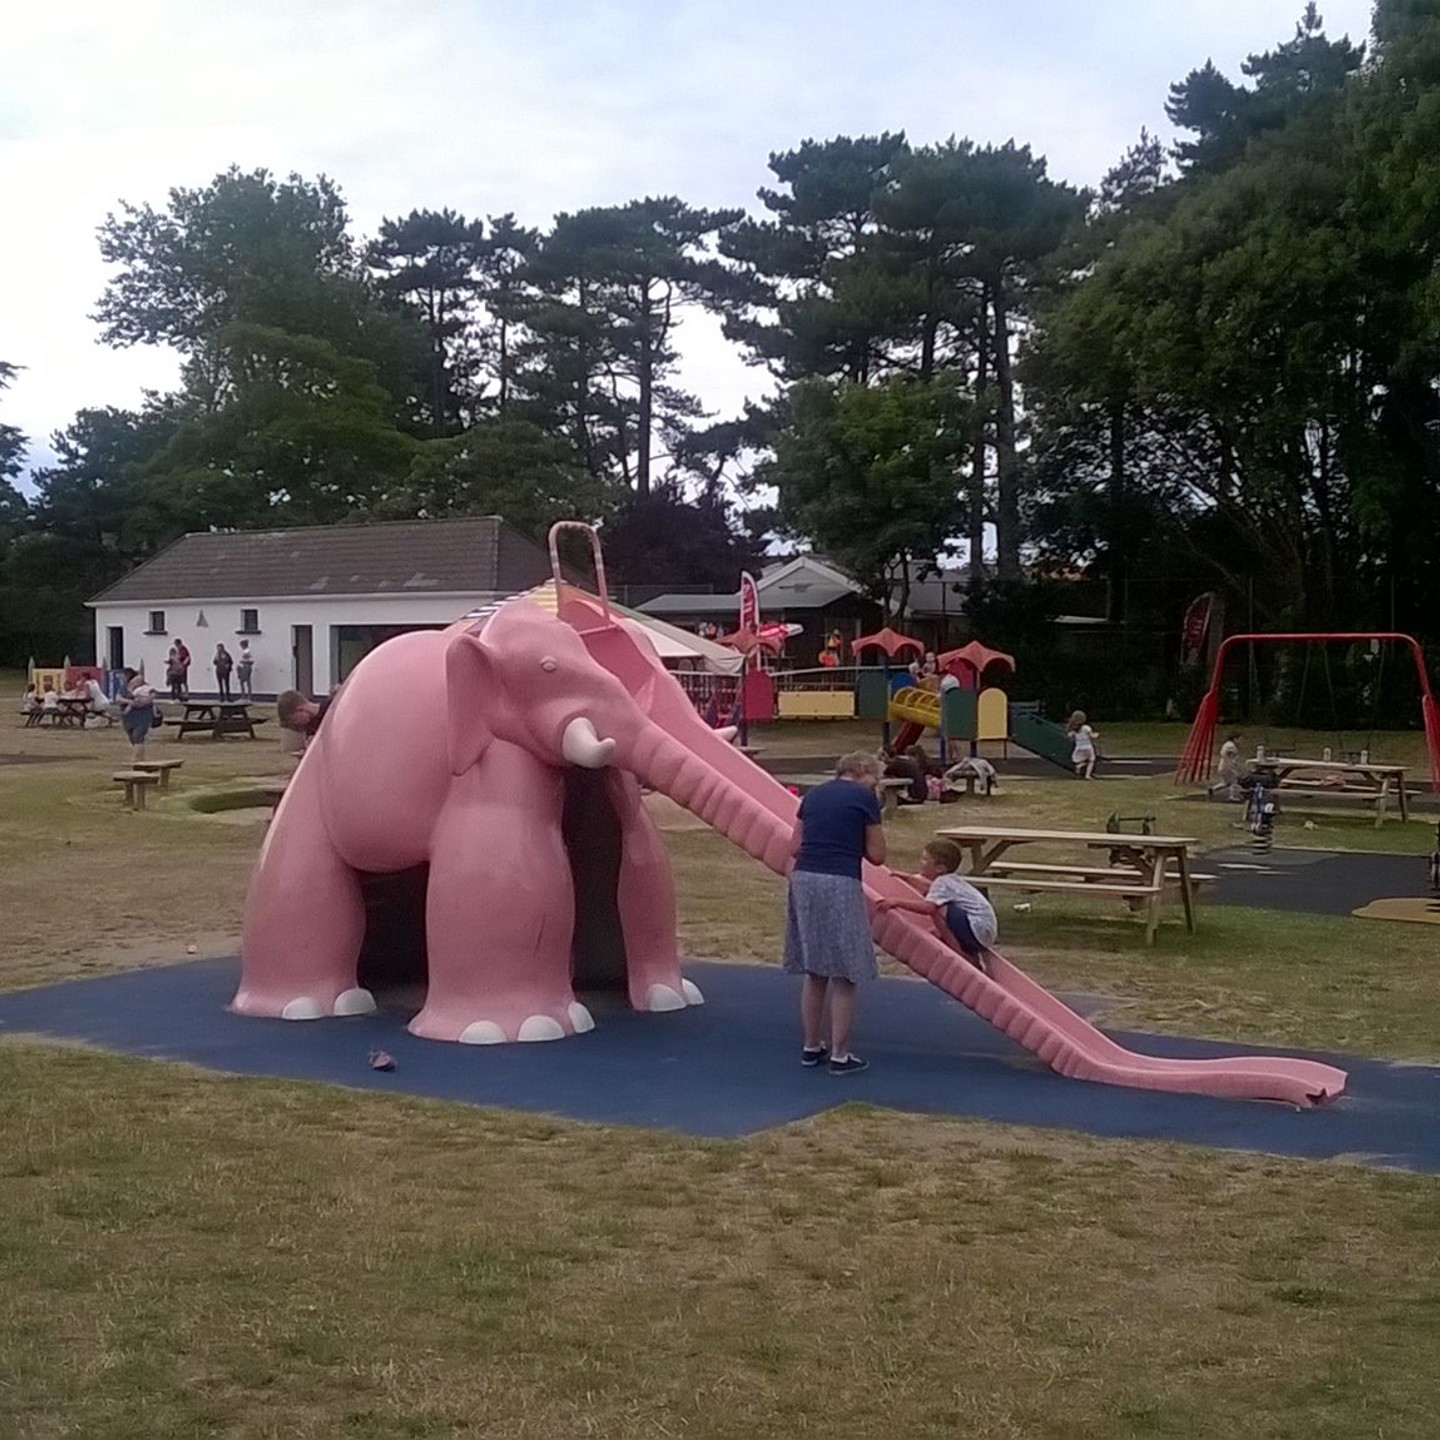 The popular pink elephant slide